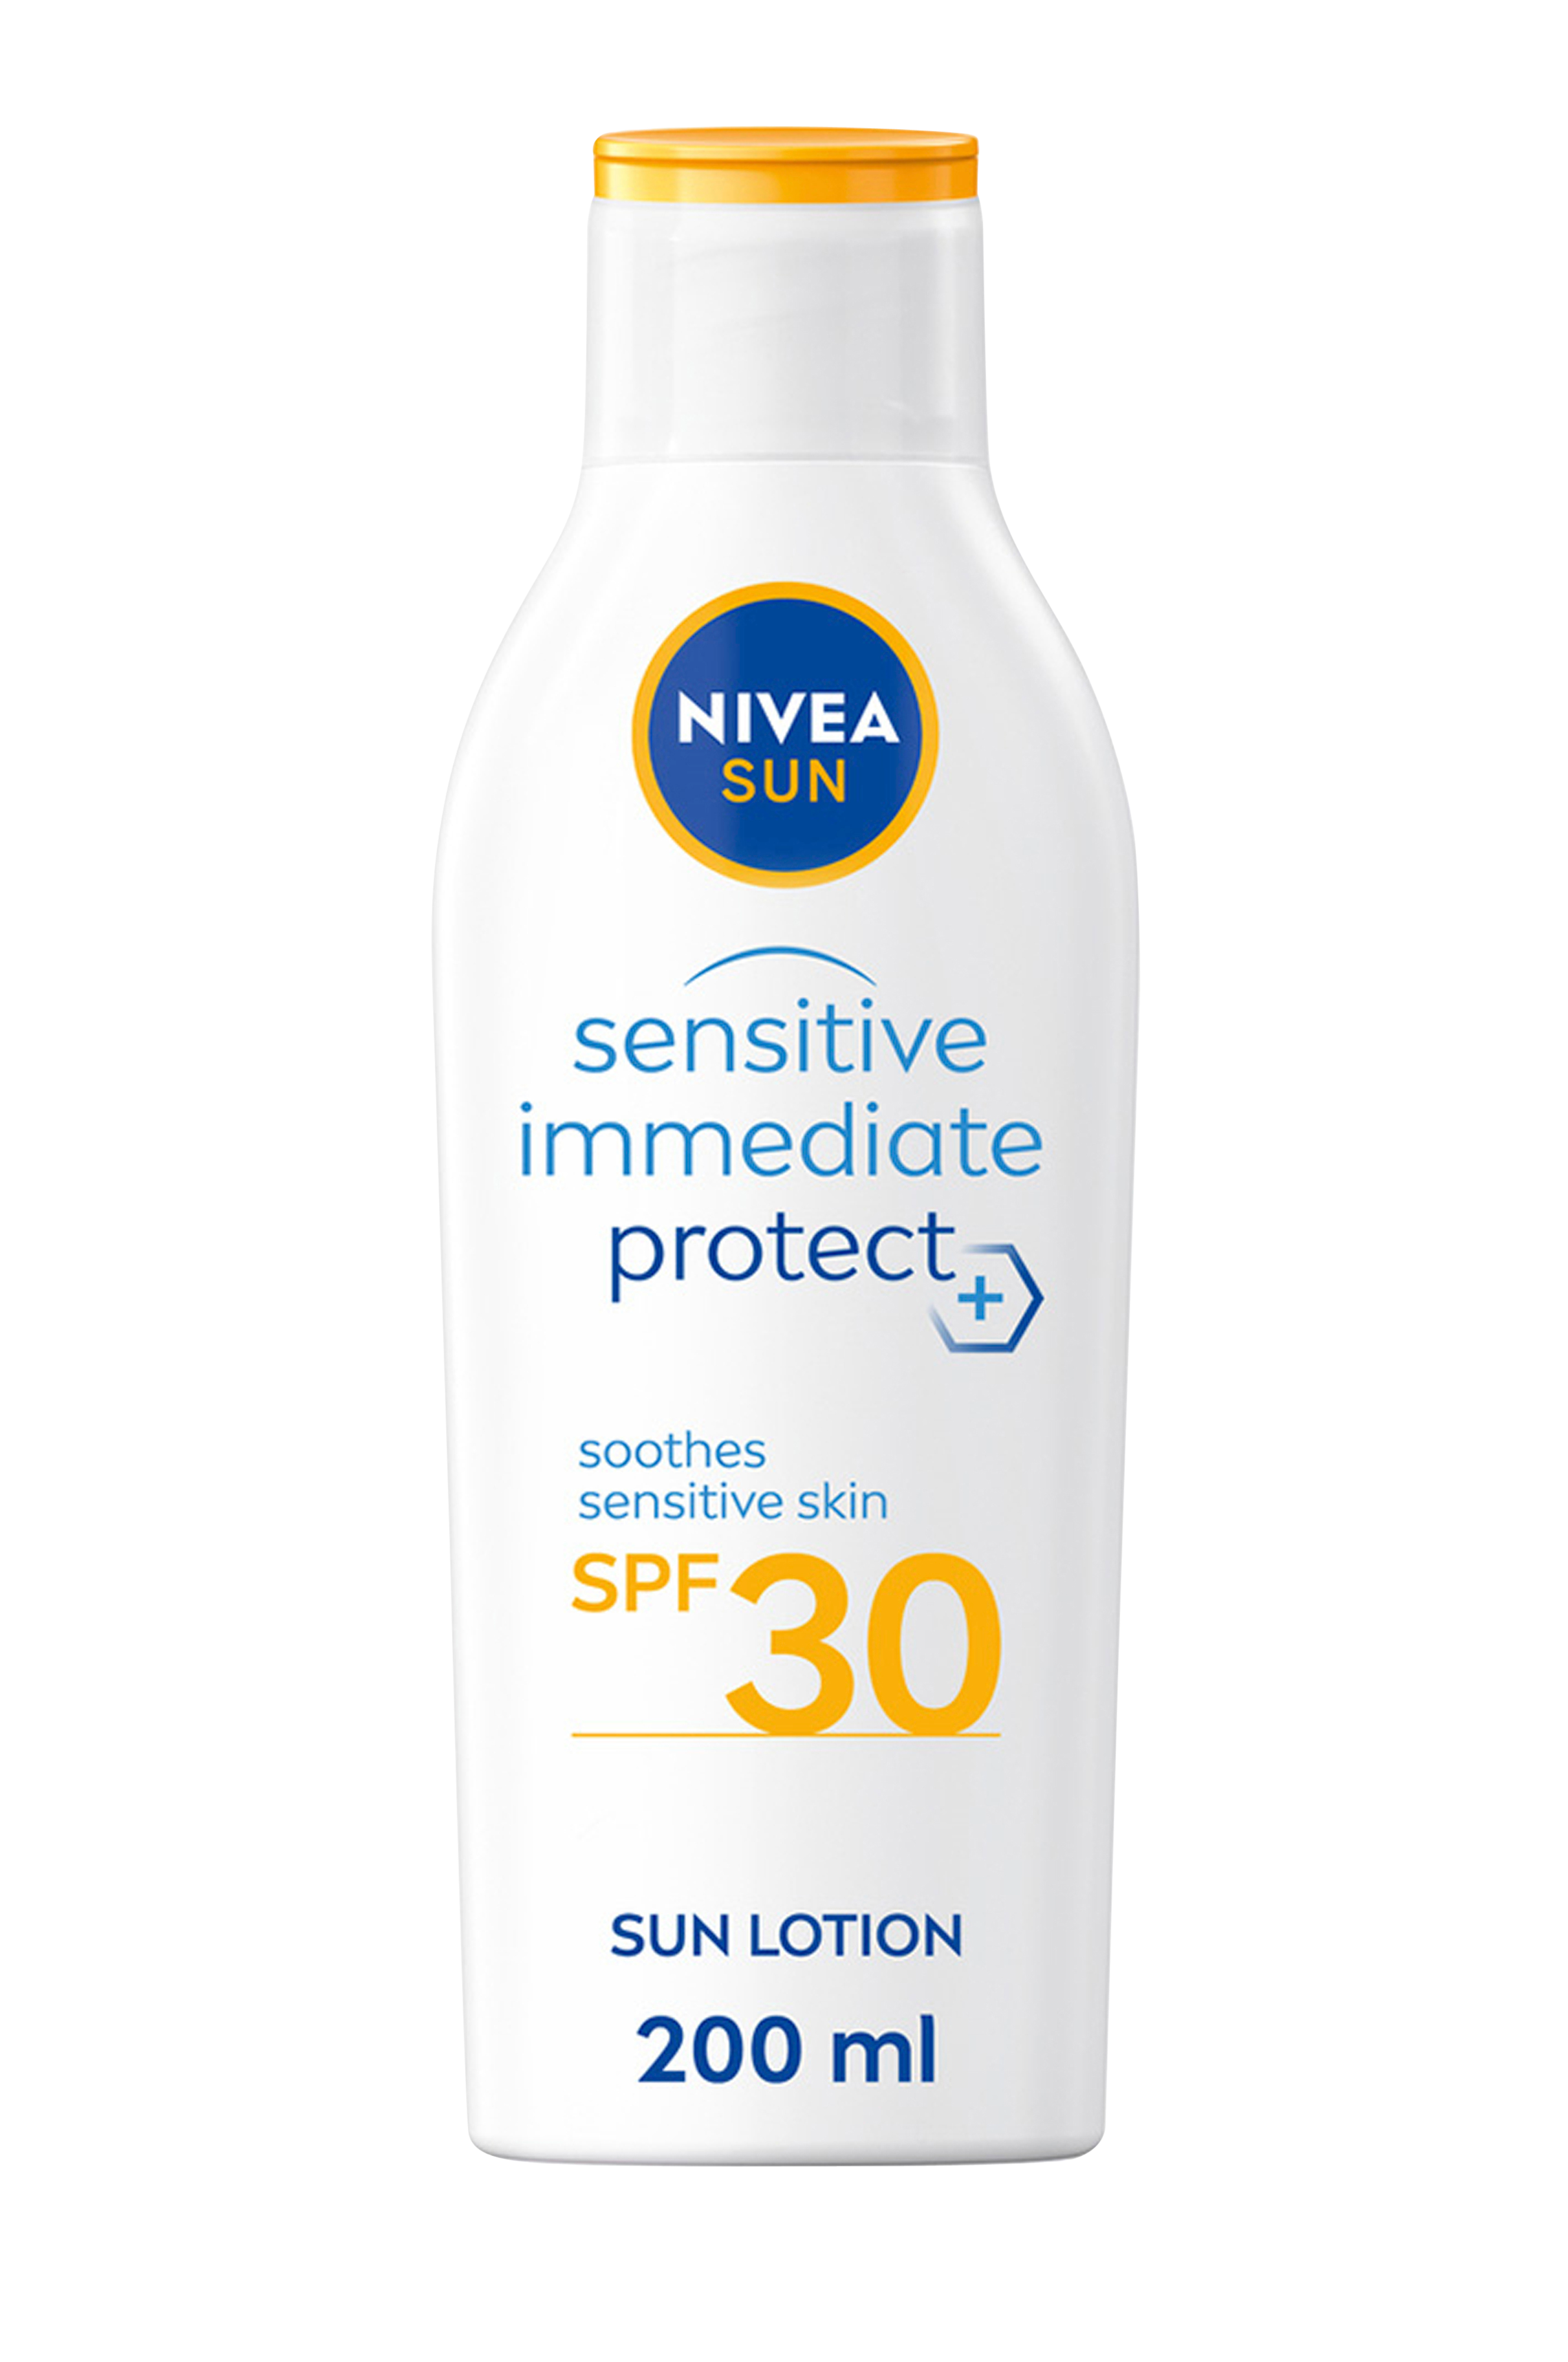 Nivea Sensitive Immediate Protect Soothing Sun Lotion SPF 30 Nivea Sun ...